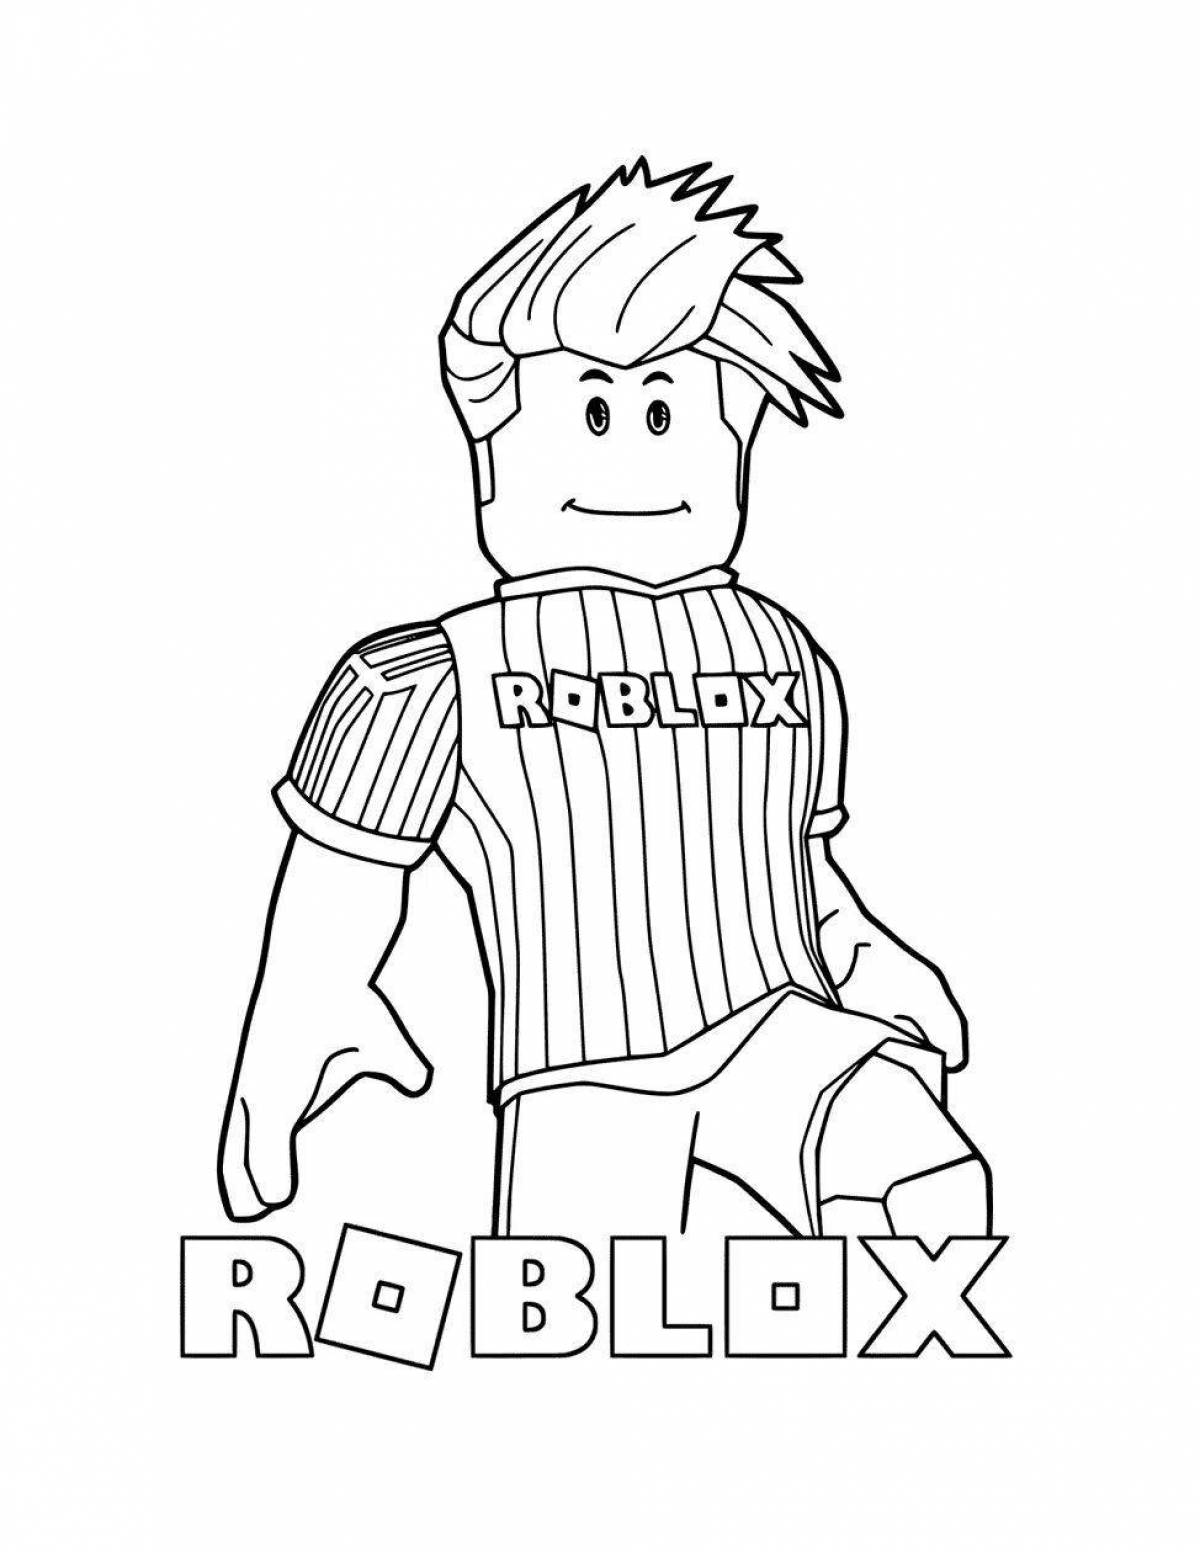 Roblox magic icon coloring page